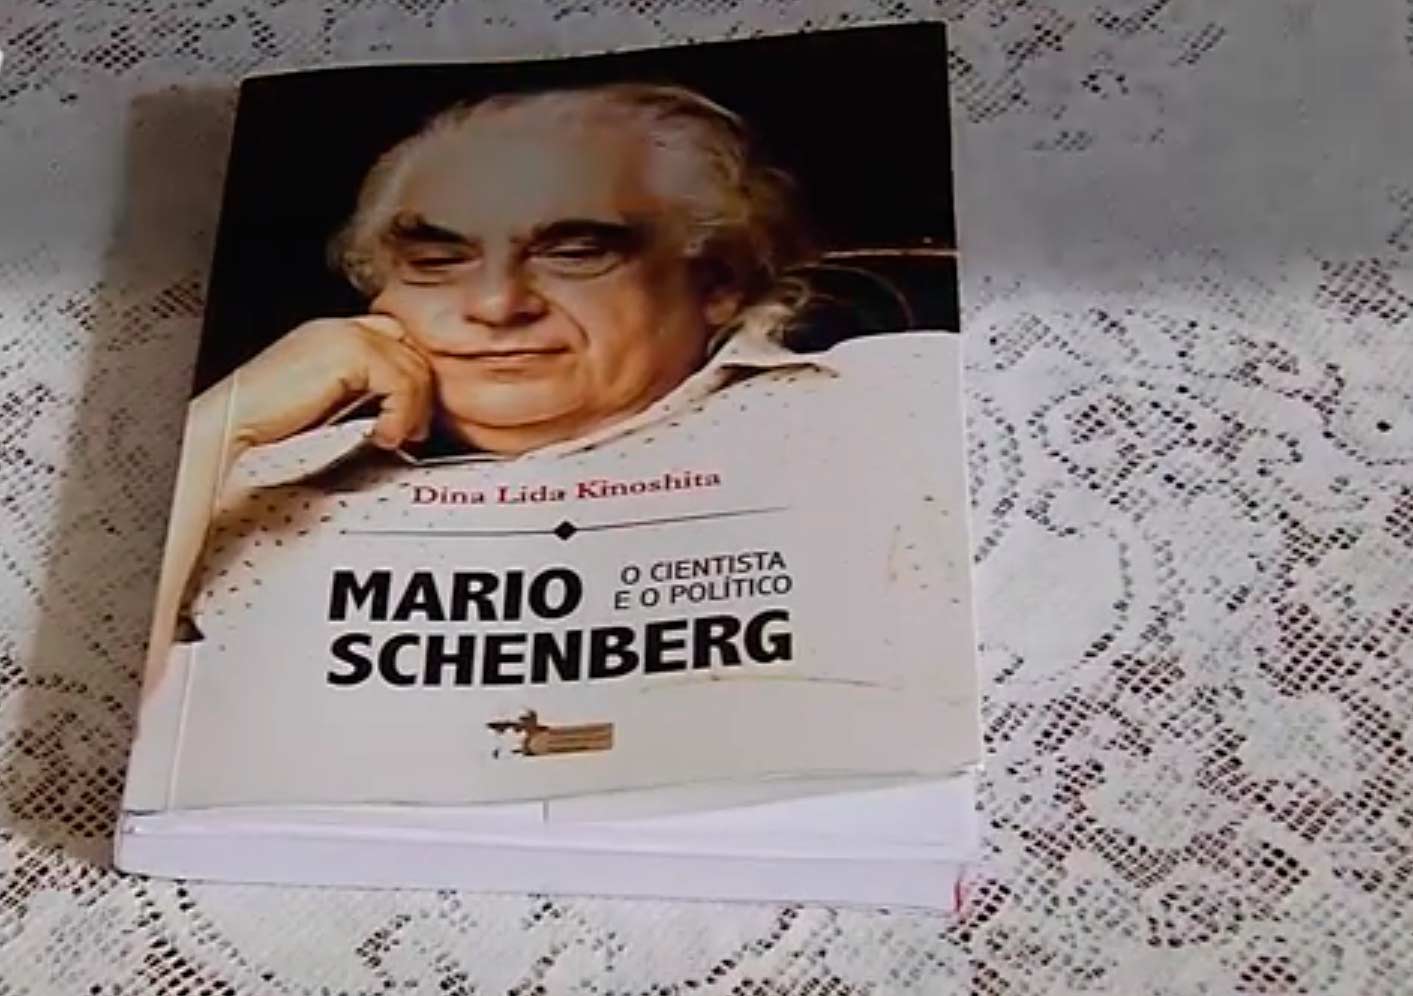 Mario Schenberg: o cientista e o político